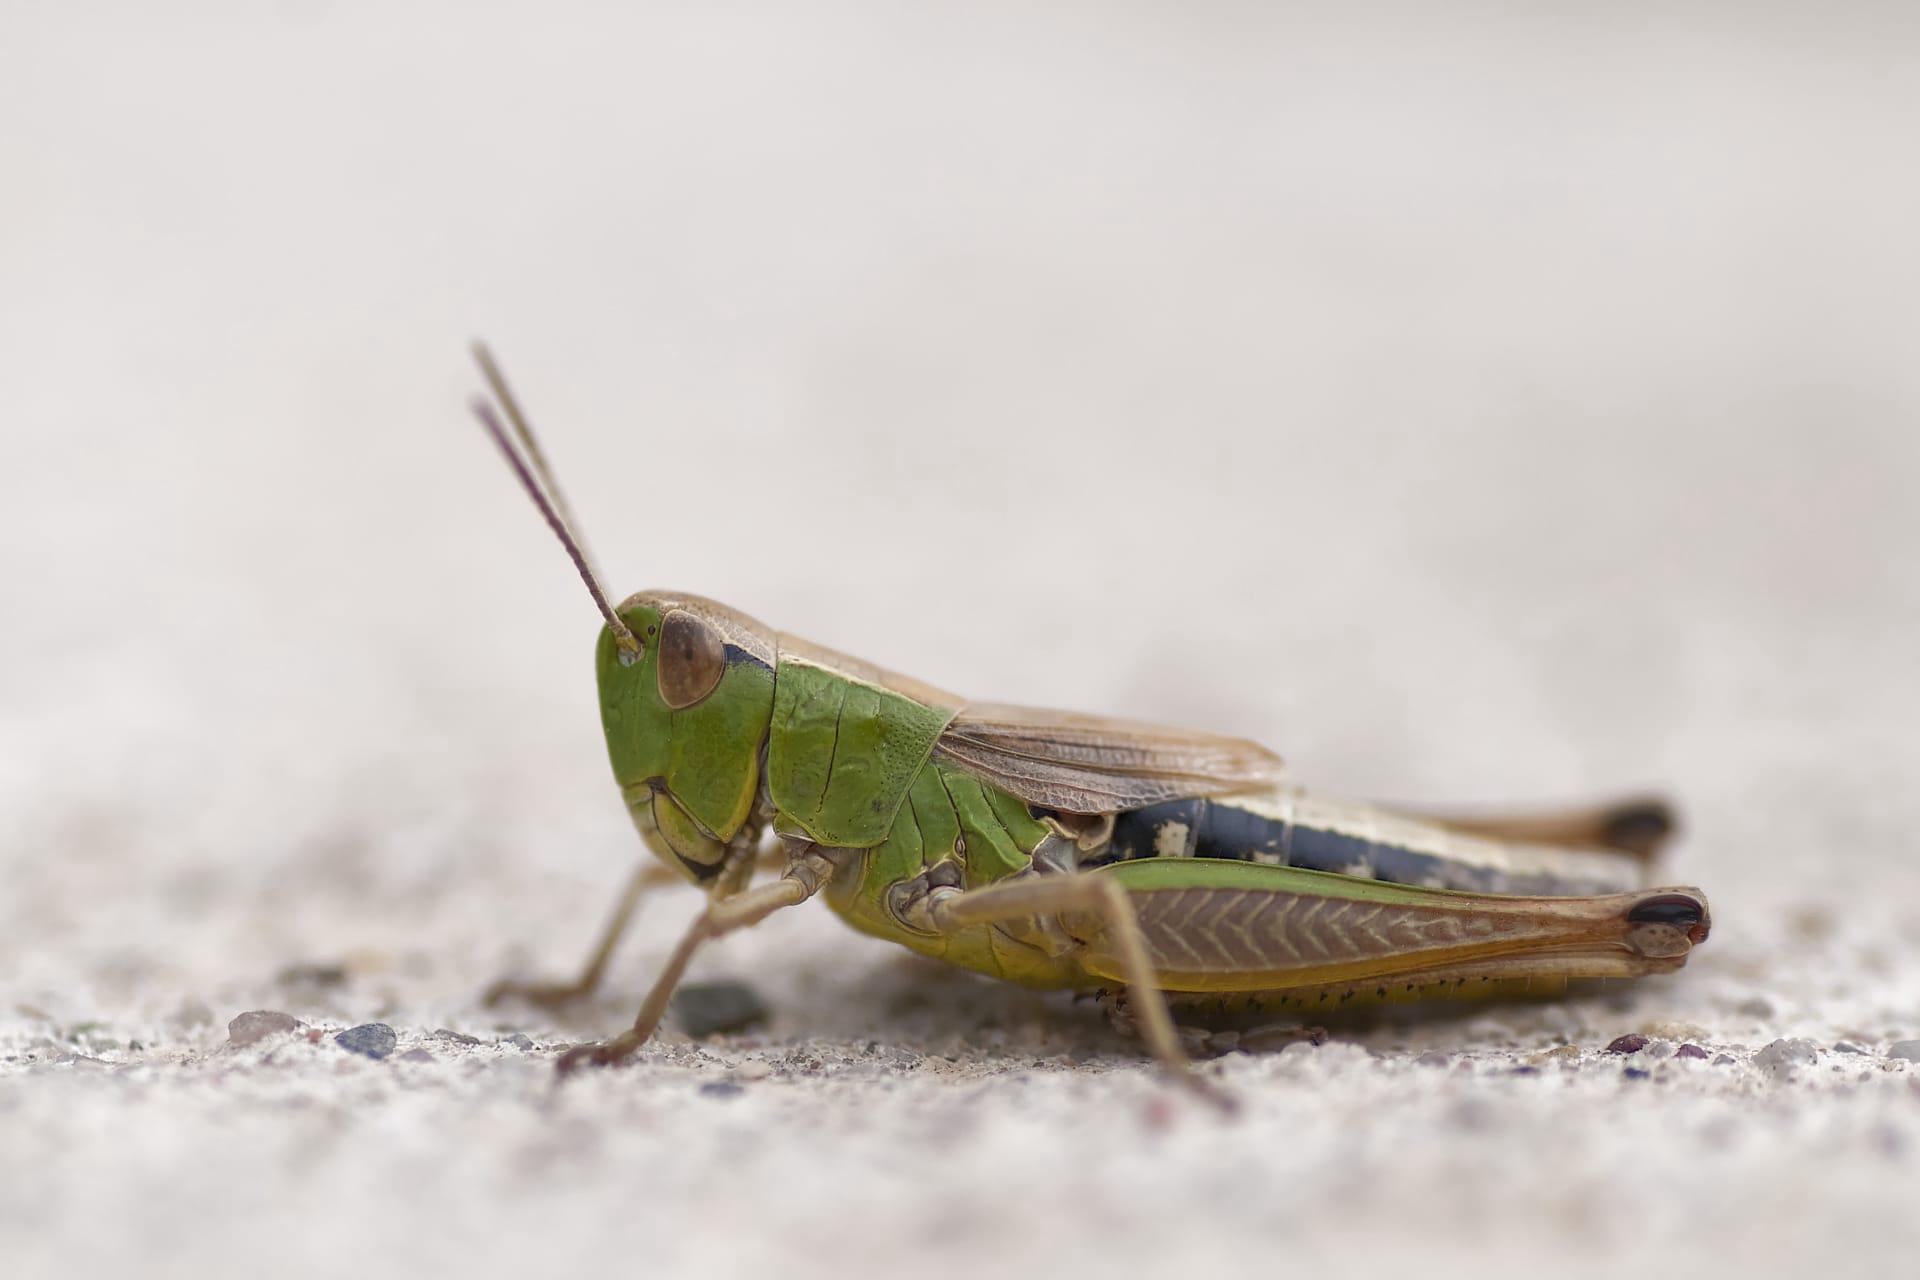 Grasshopper pictures